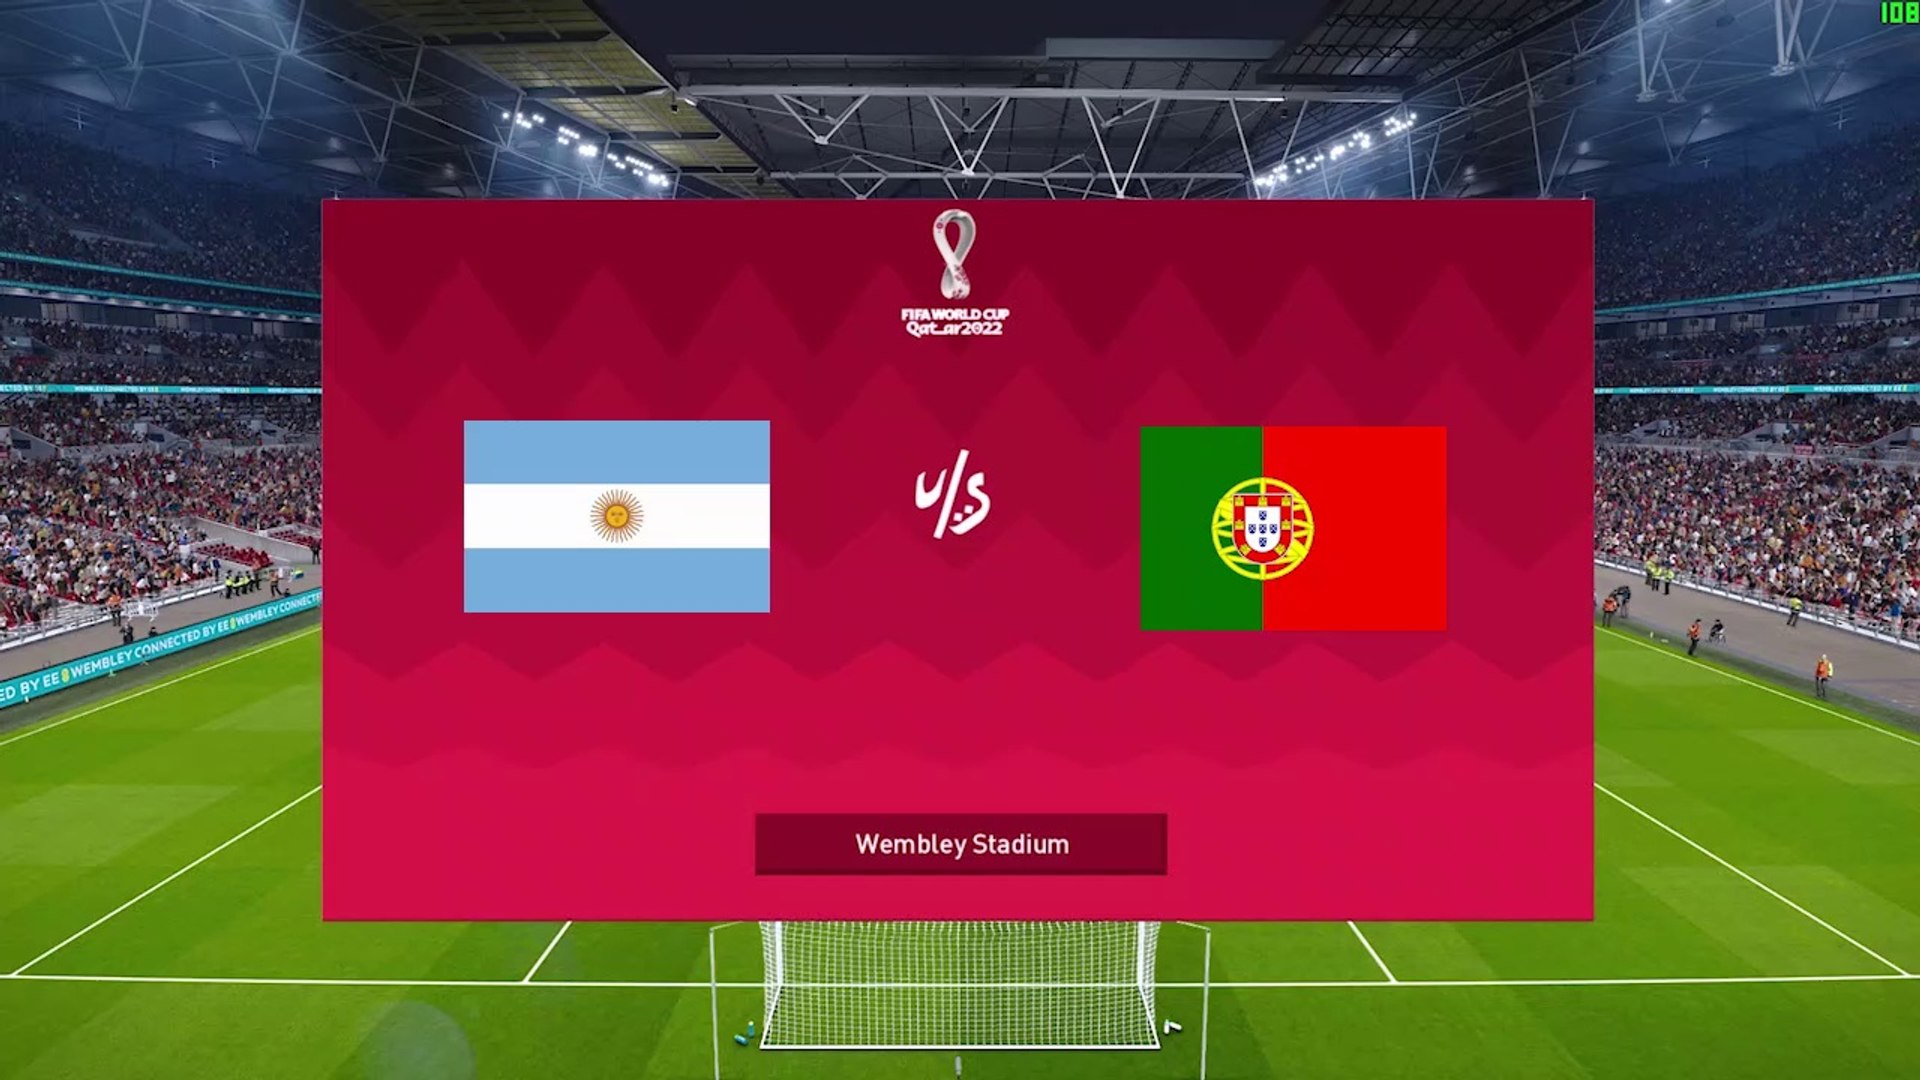 FIFA WORLD CUP 2022 FINAL - ARGENTINA VS PORTUGAL